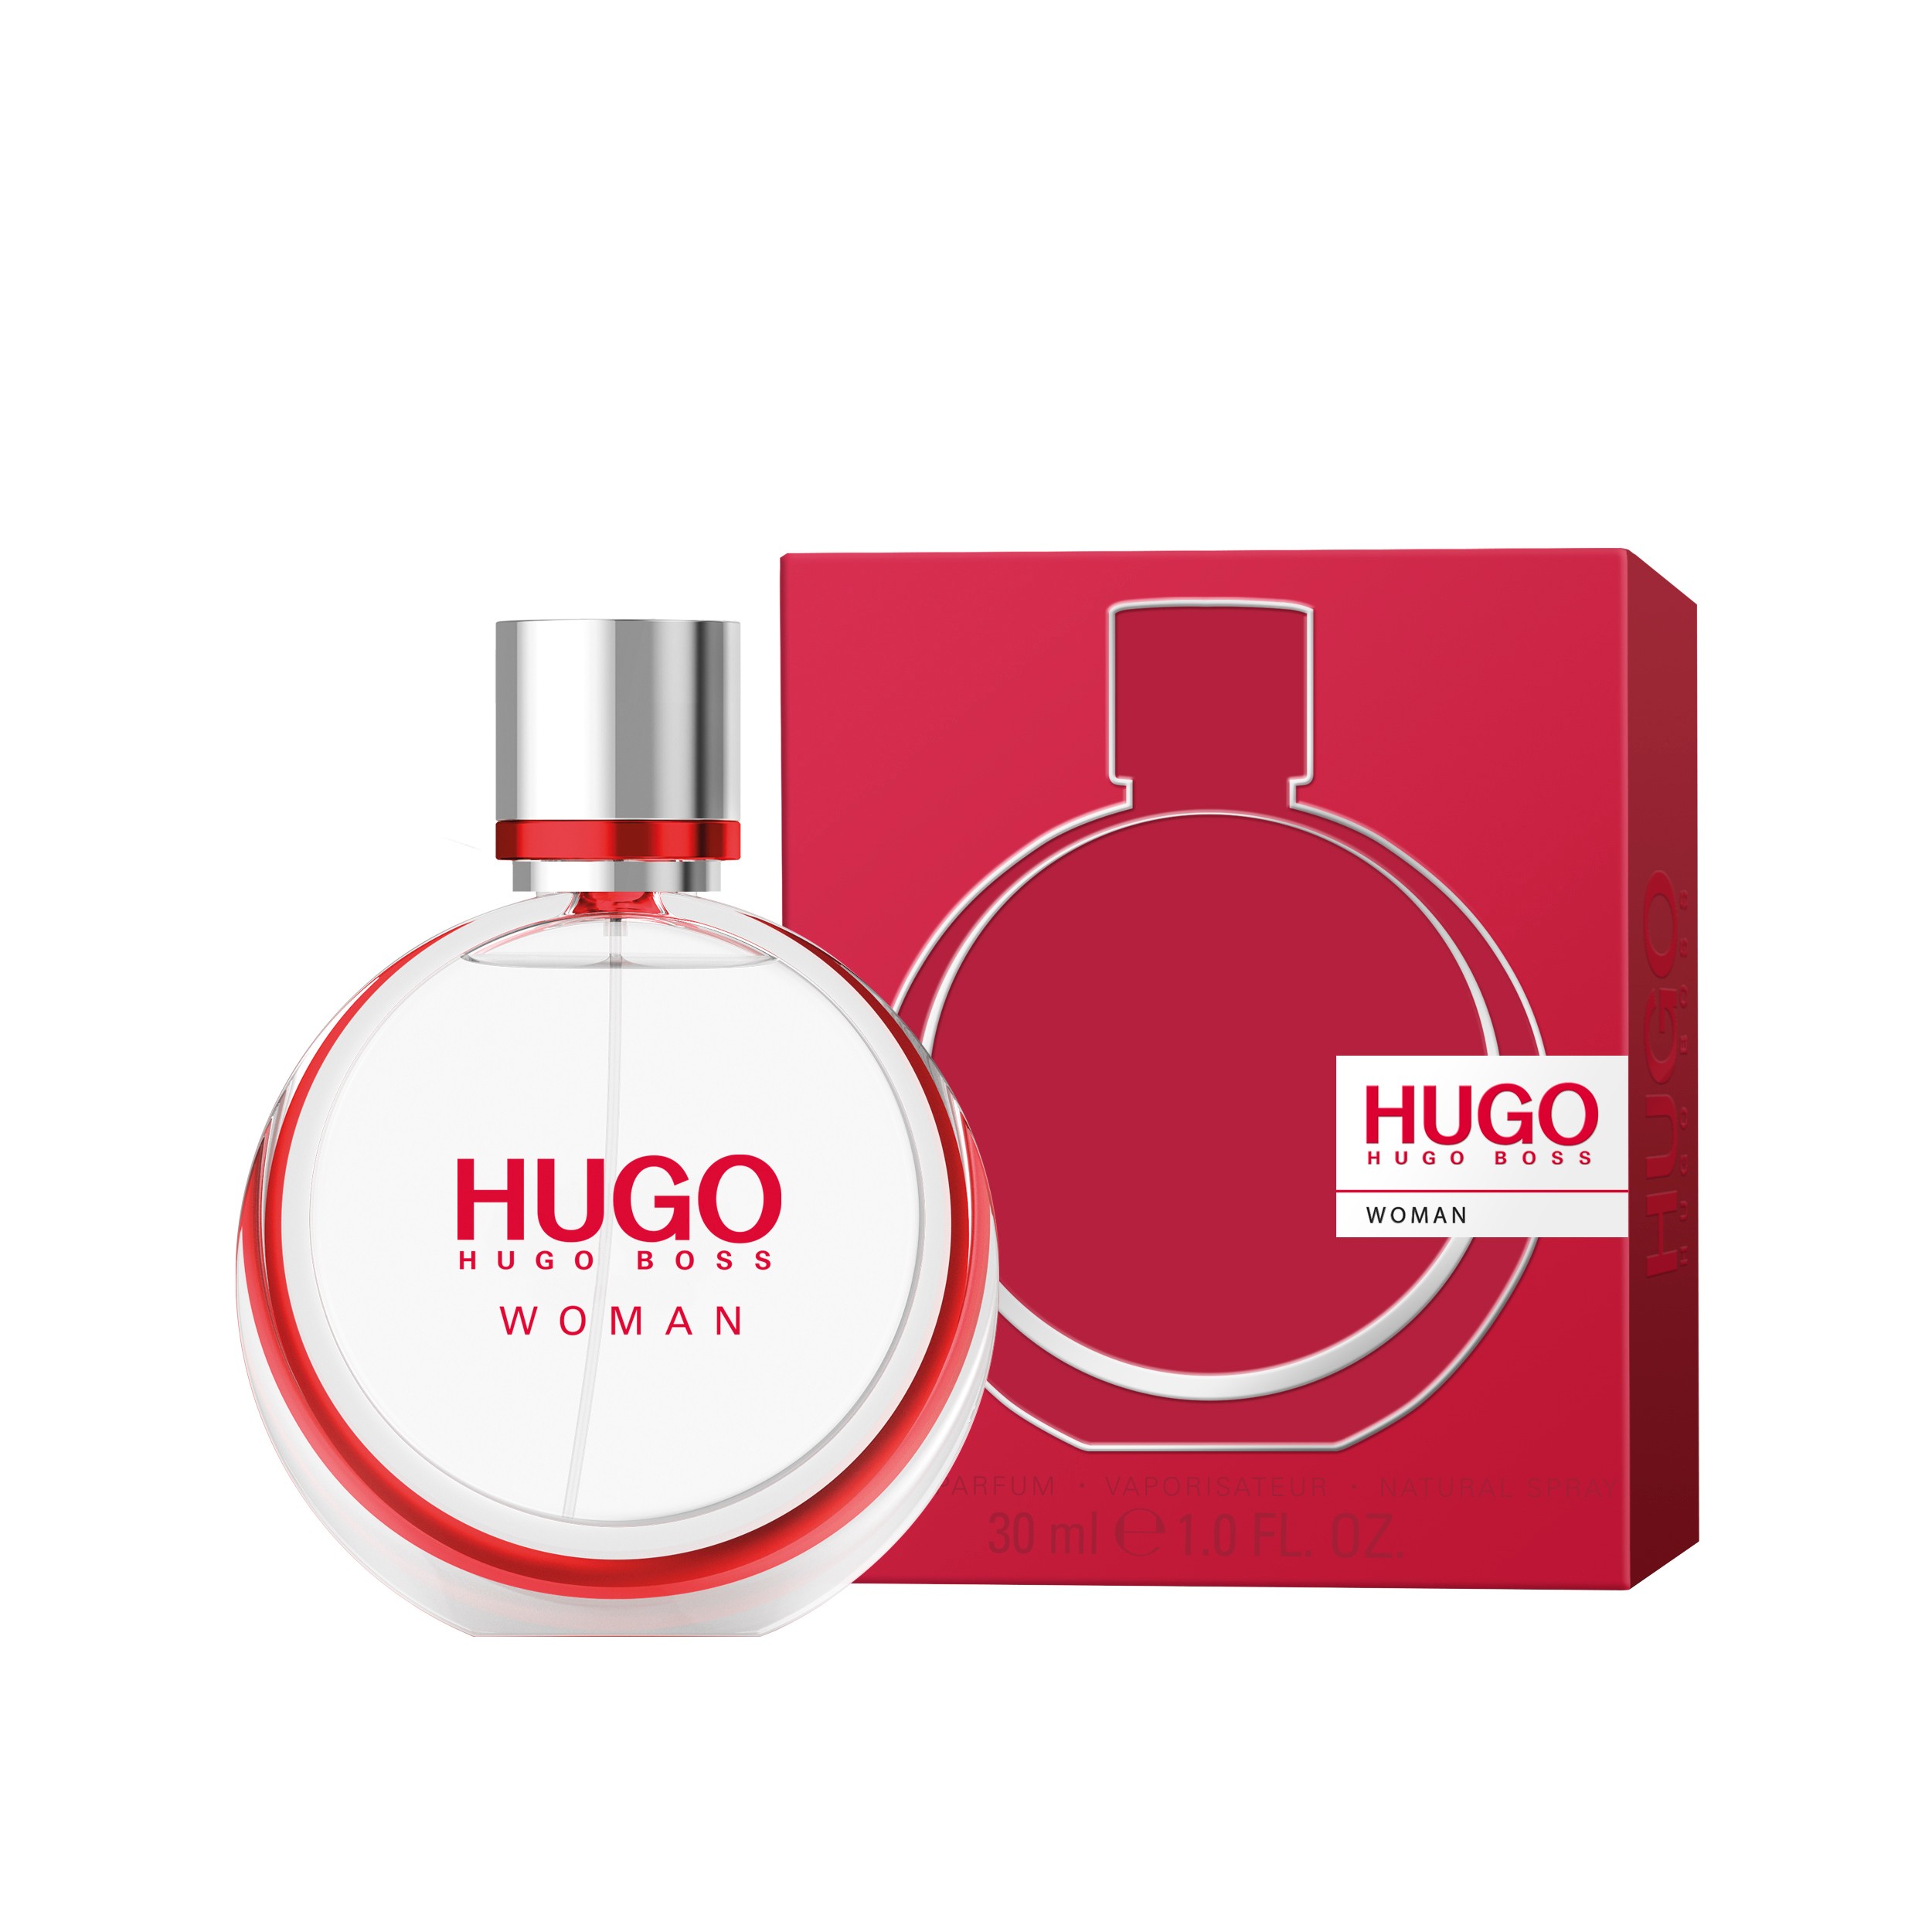 Туалетная вода женская women. Hugo Boss Hugo woman 30ml EDP /Ж/ (красный). Hugo Boss Lady 30ml EDP. Hugo Boss Hugo woman Eau de Parfum. Hugo Boss Boss woman EDP 90ml.